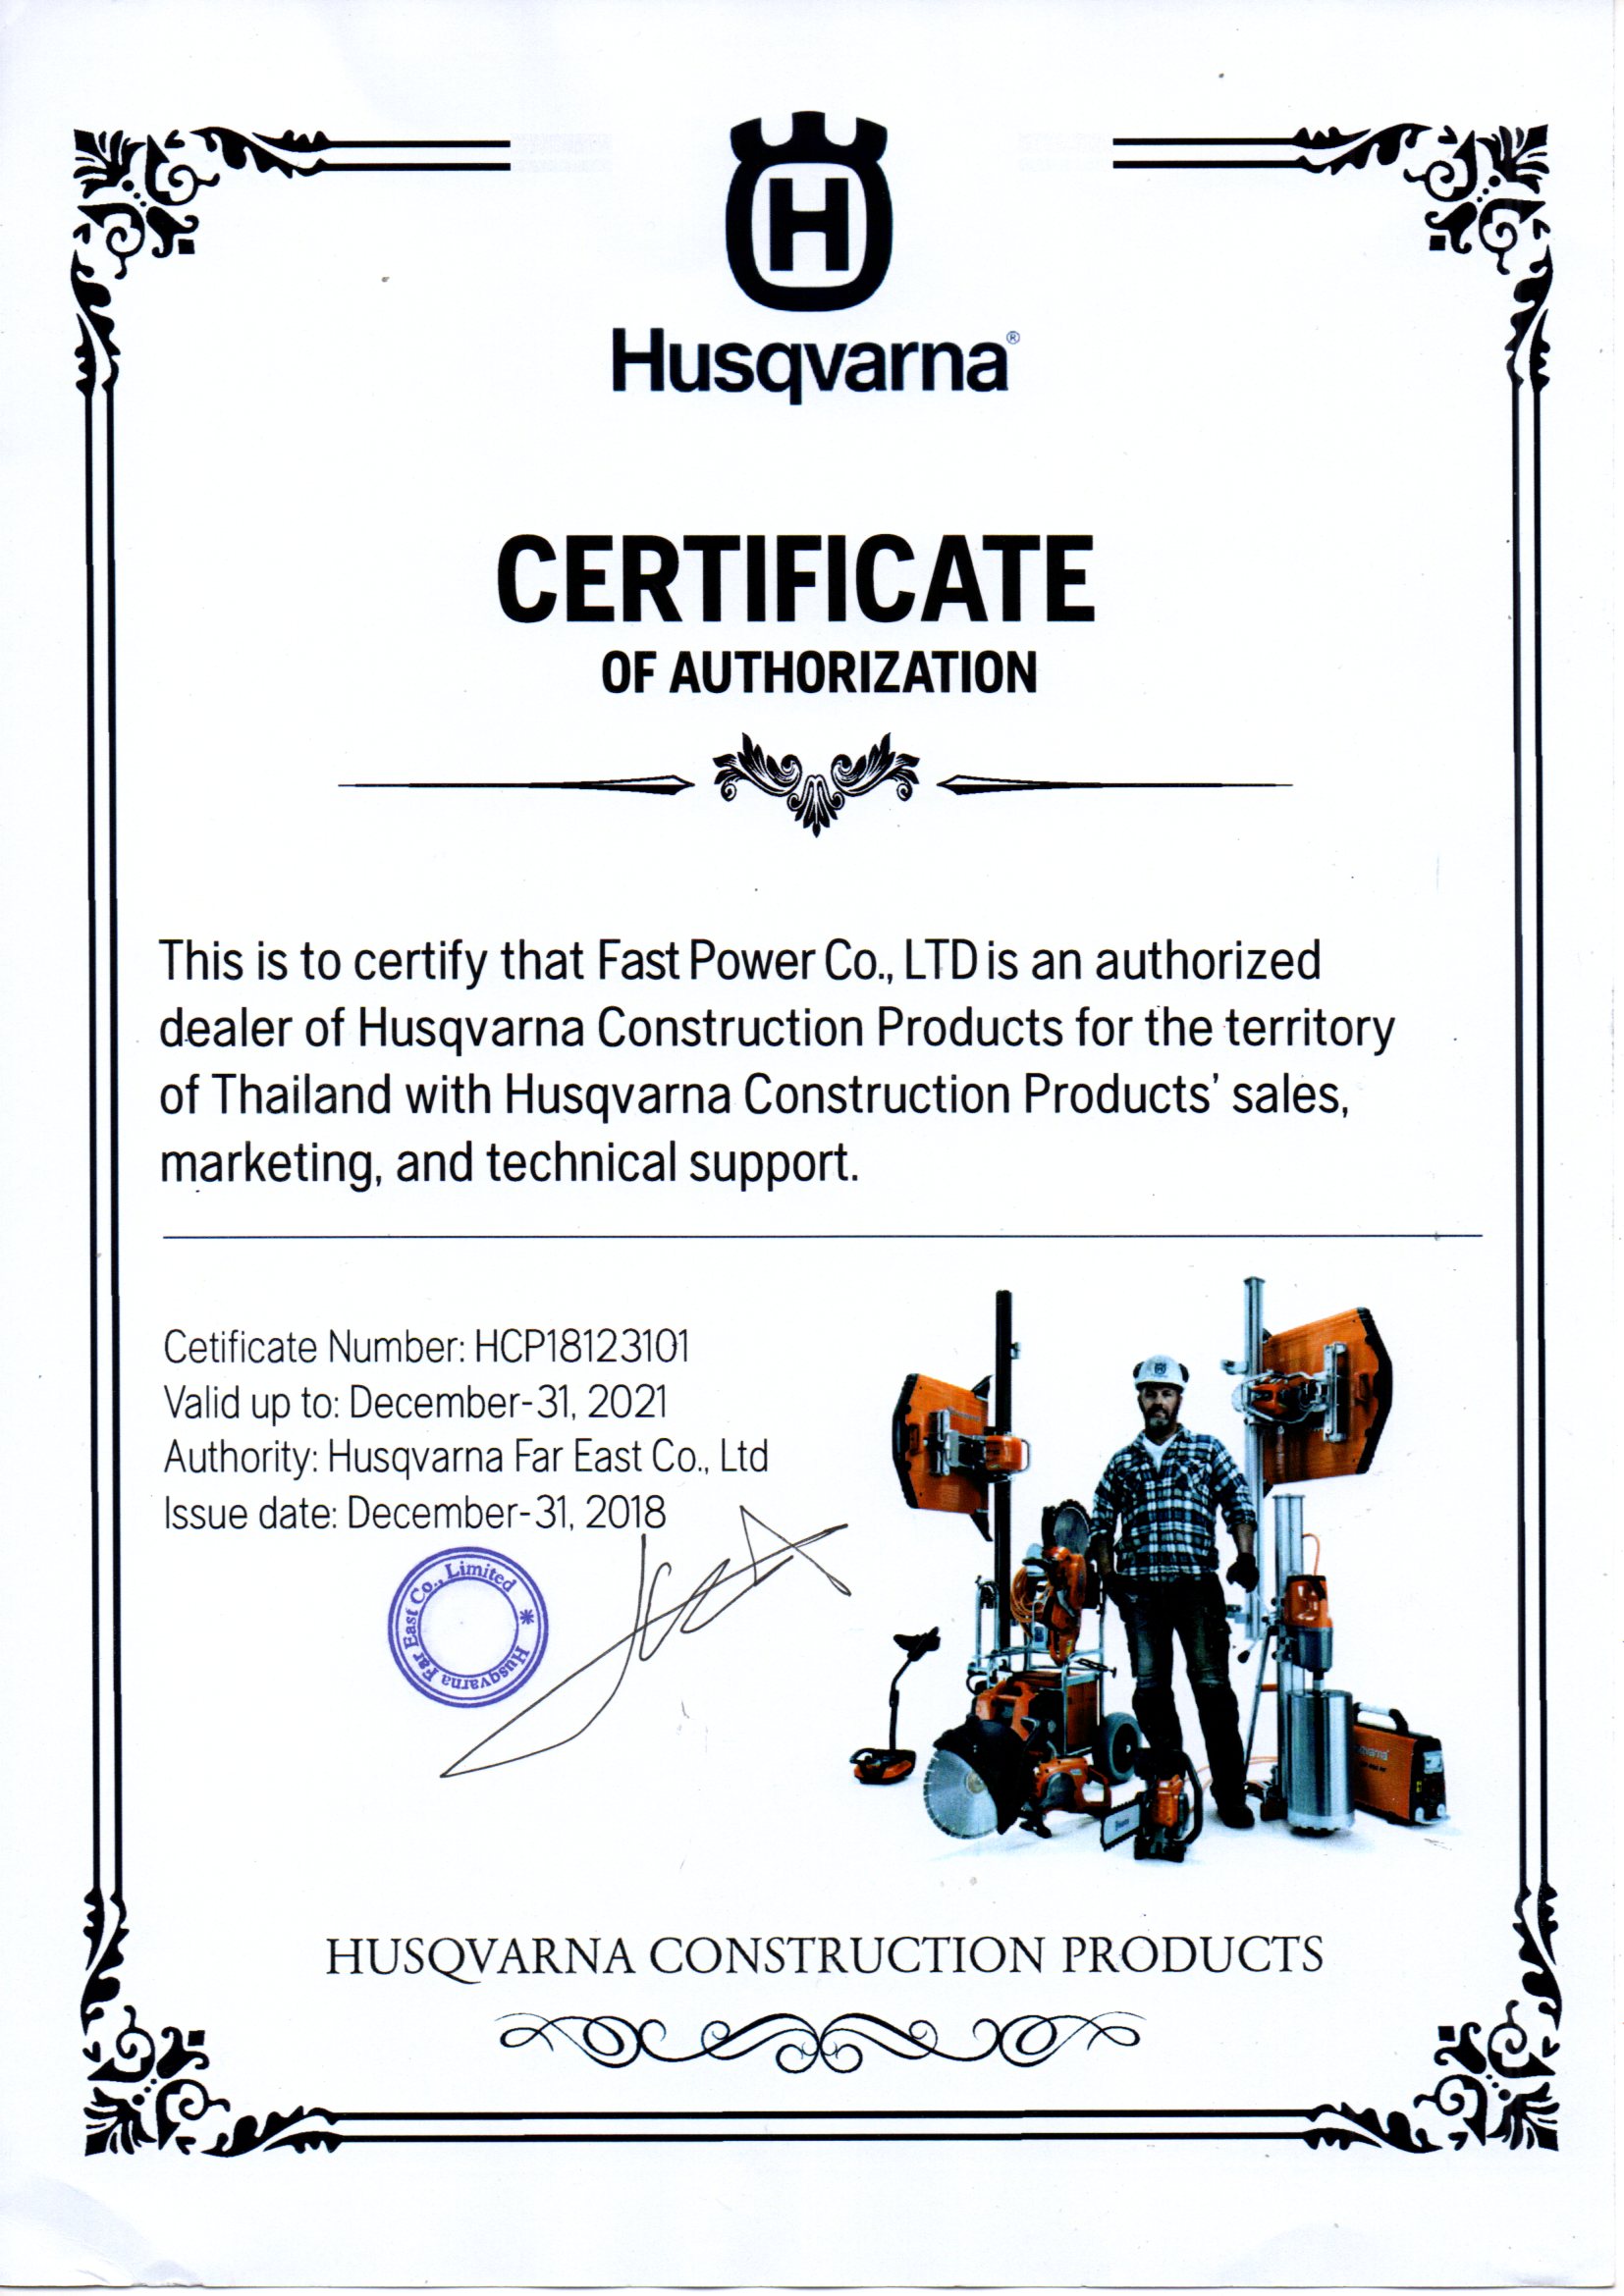 Husqvarna Certificate